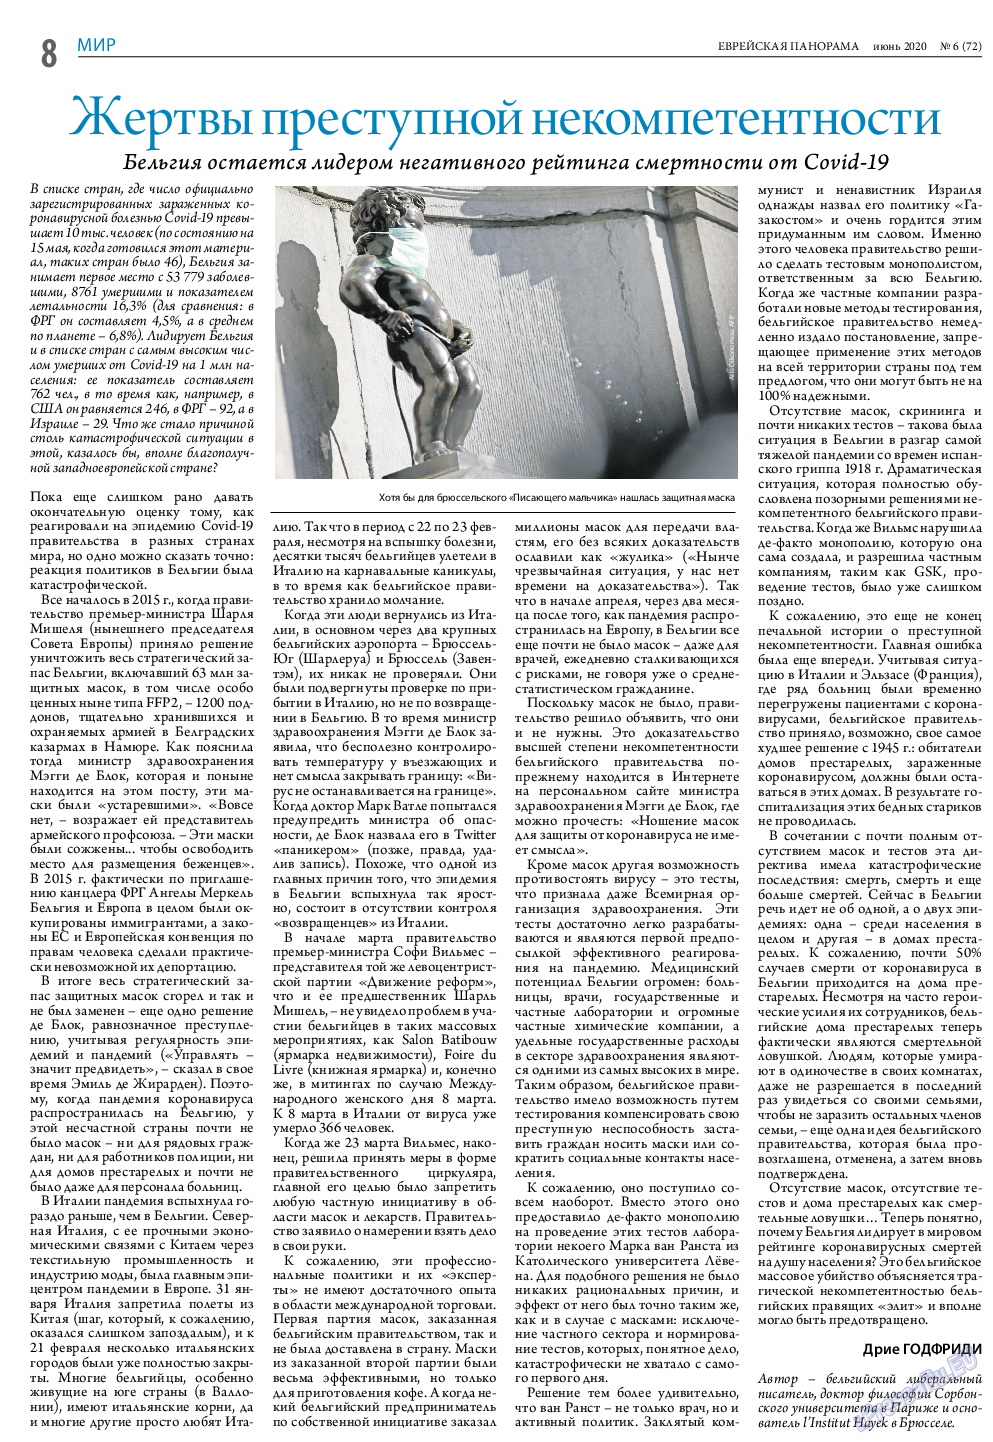 Еврейская панорама, газета. 2020 №6 стр.8